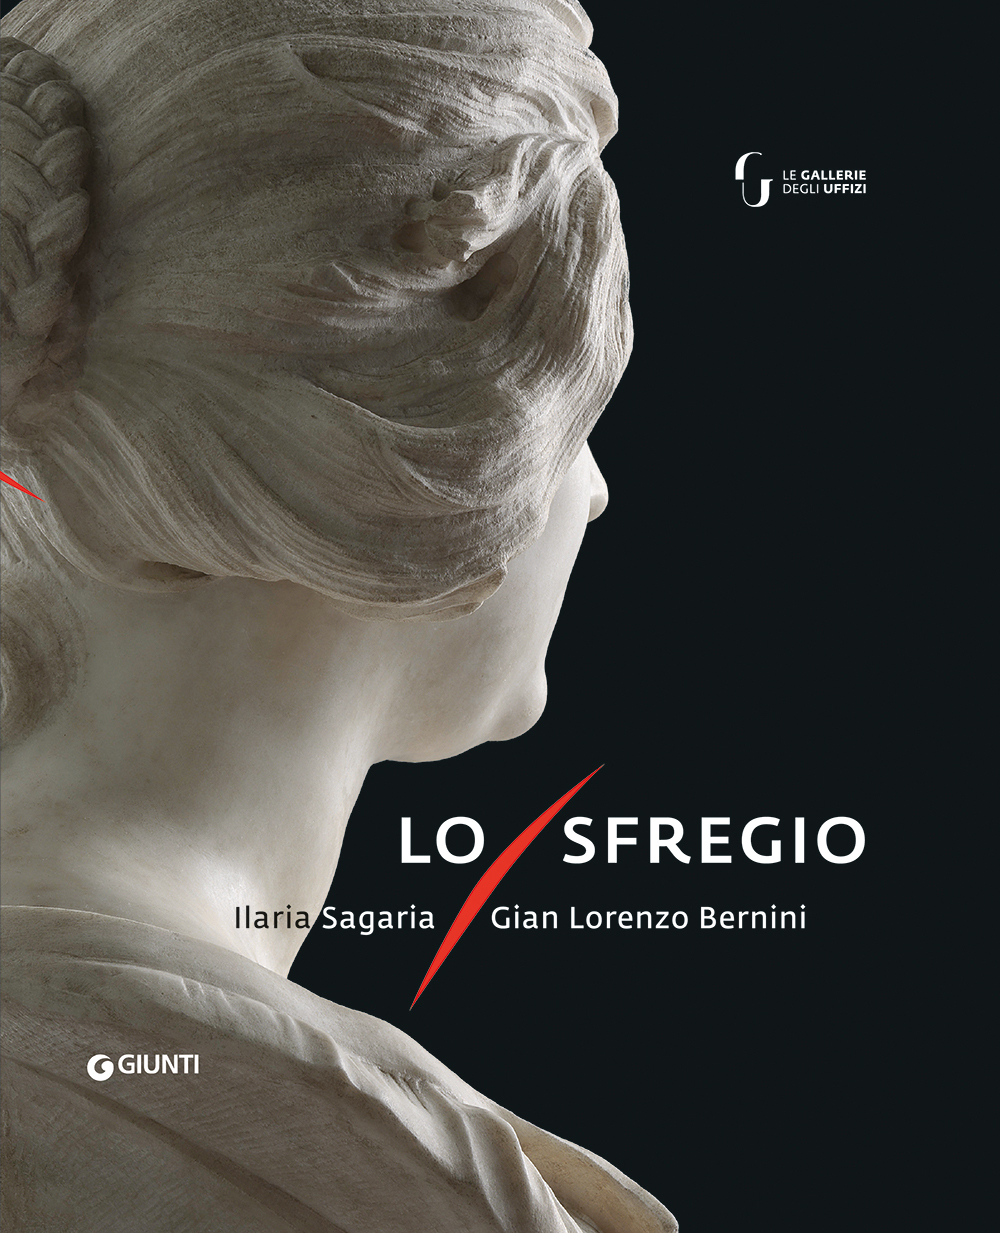 Lo sfregio. Gian Lorenzo Bernini / Ilaria Sagaria